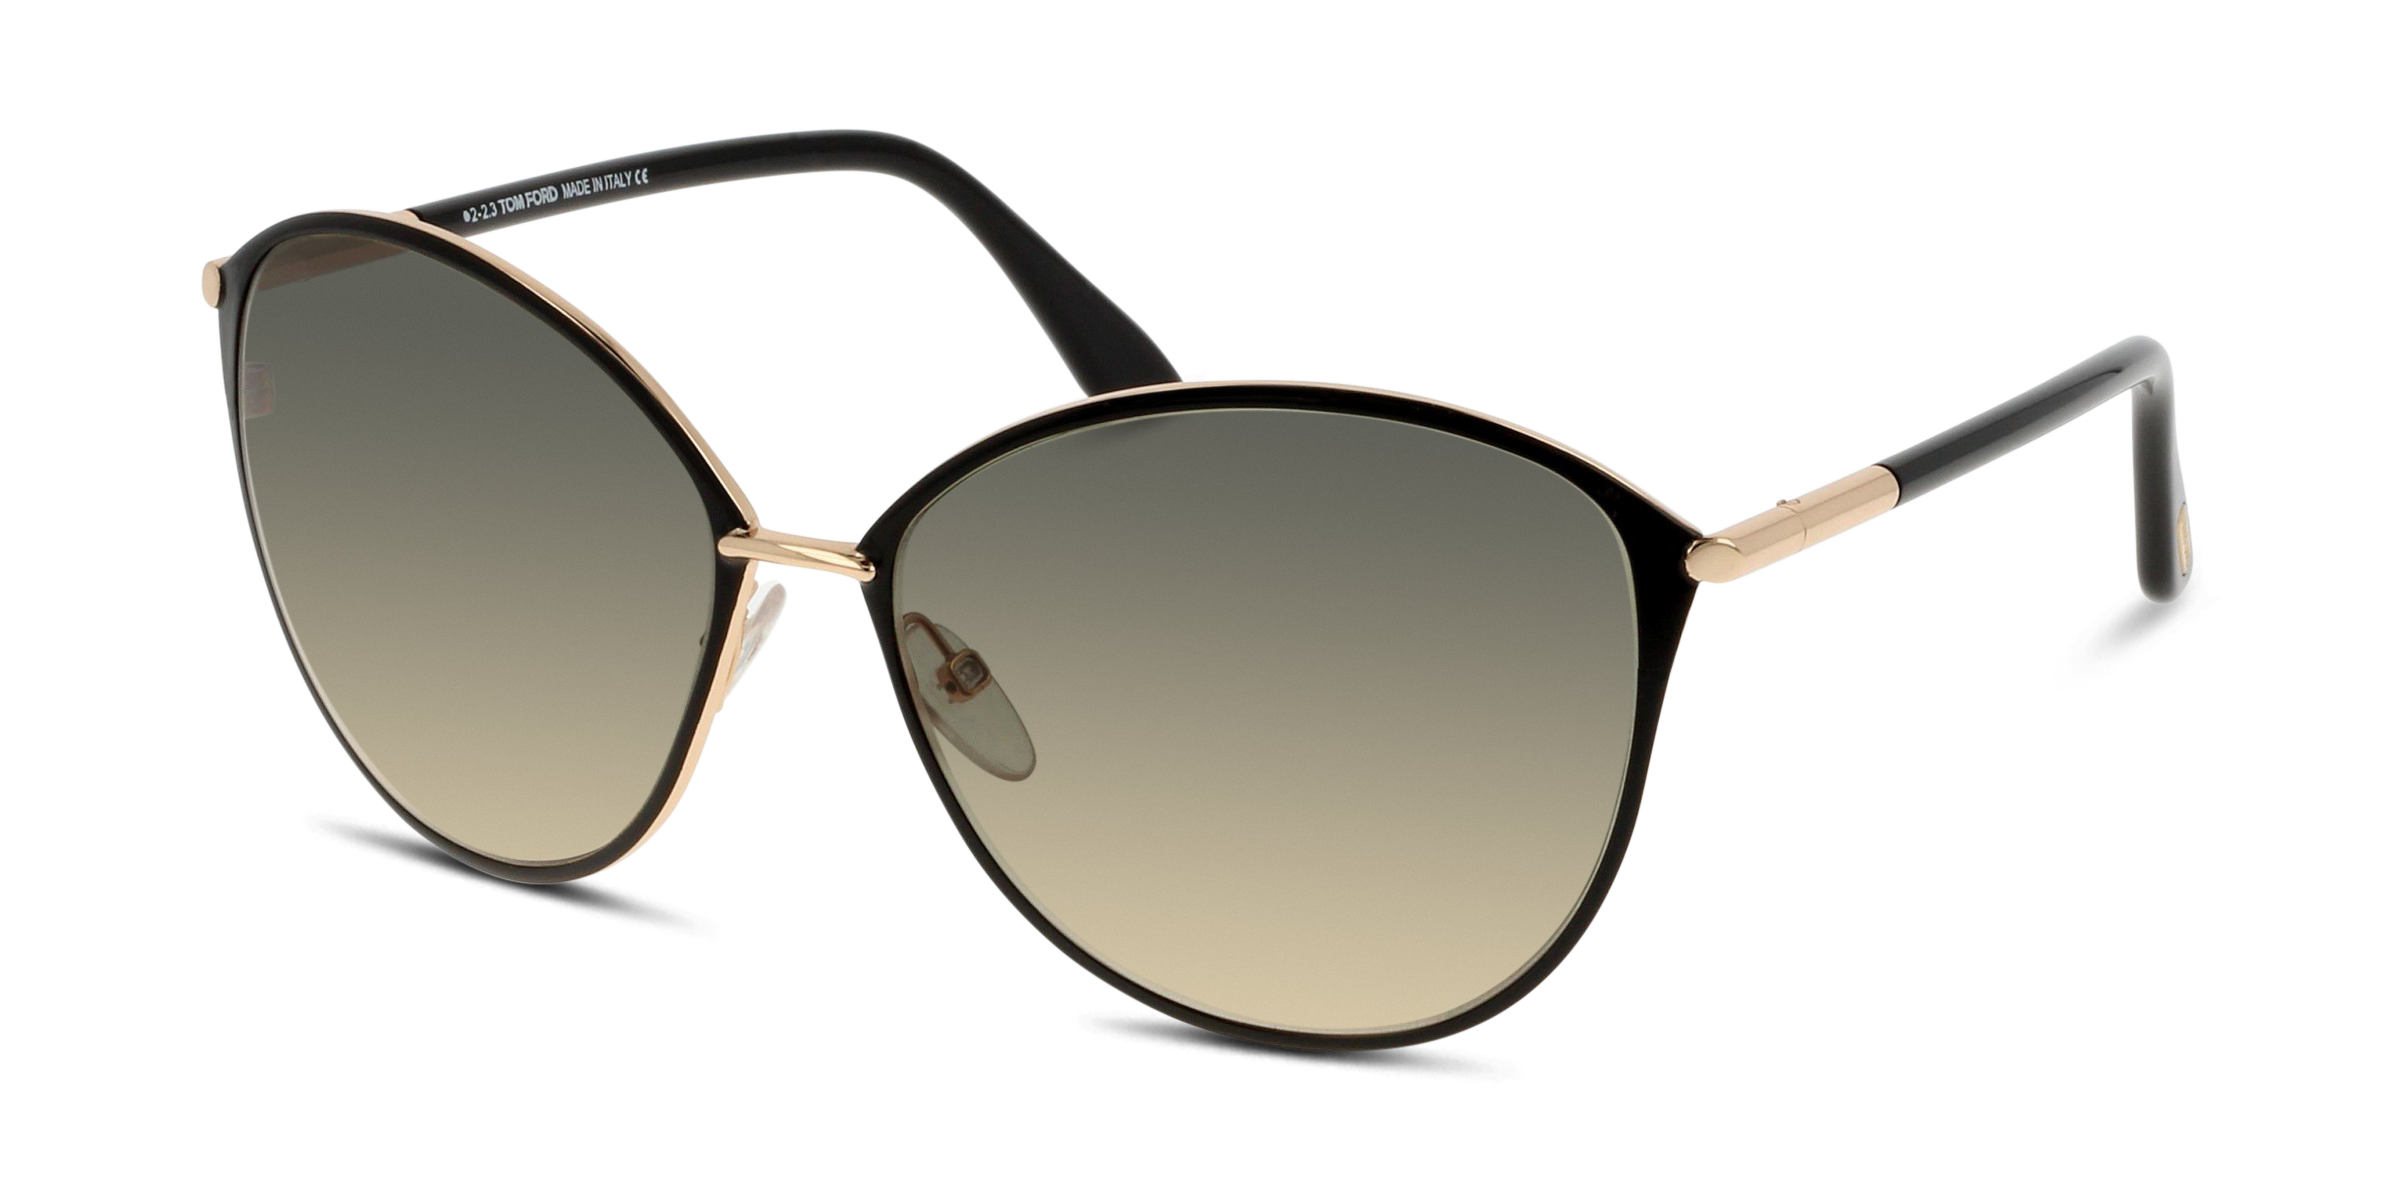 Angle_Left01 Tom Ford Penelope FT 320 (28B) Sunglasses Grey / Black